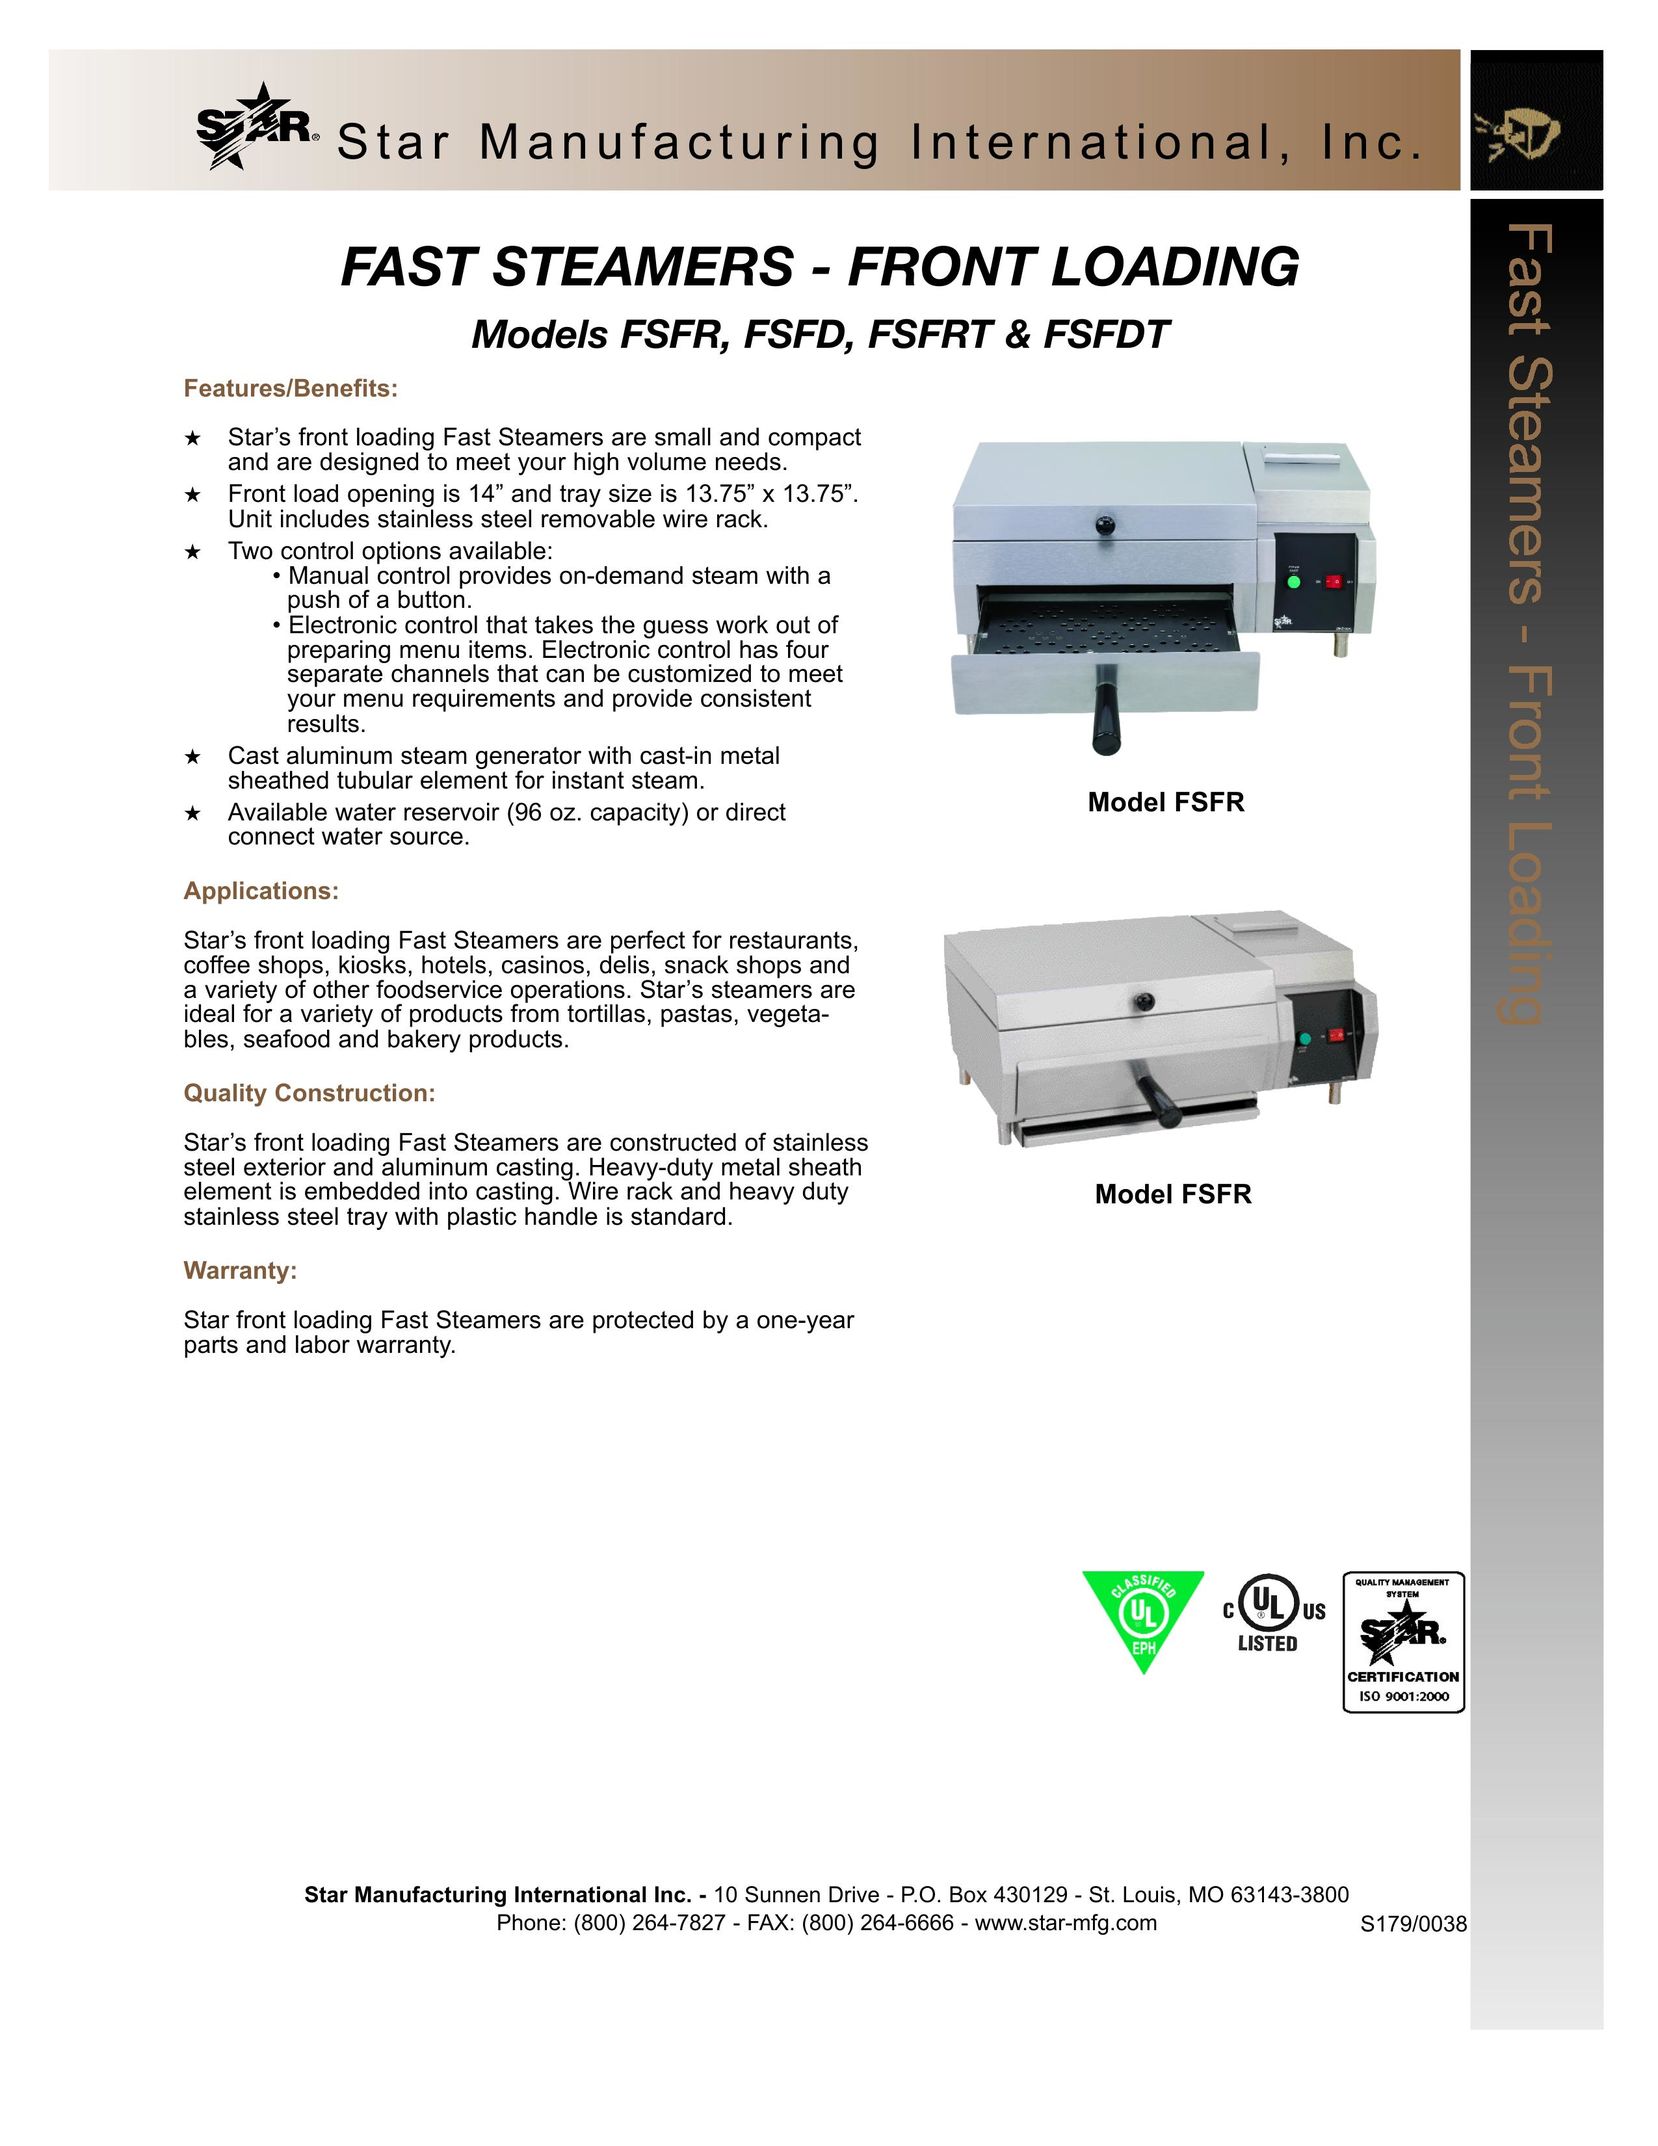 Star Manufacturing FSFRT Electric Steamer User Manual